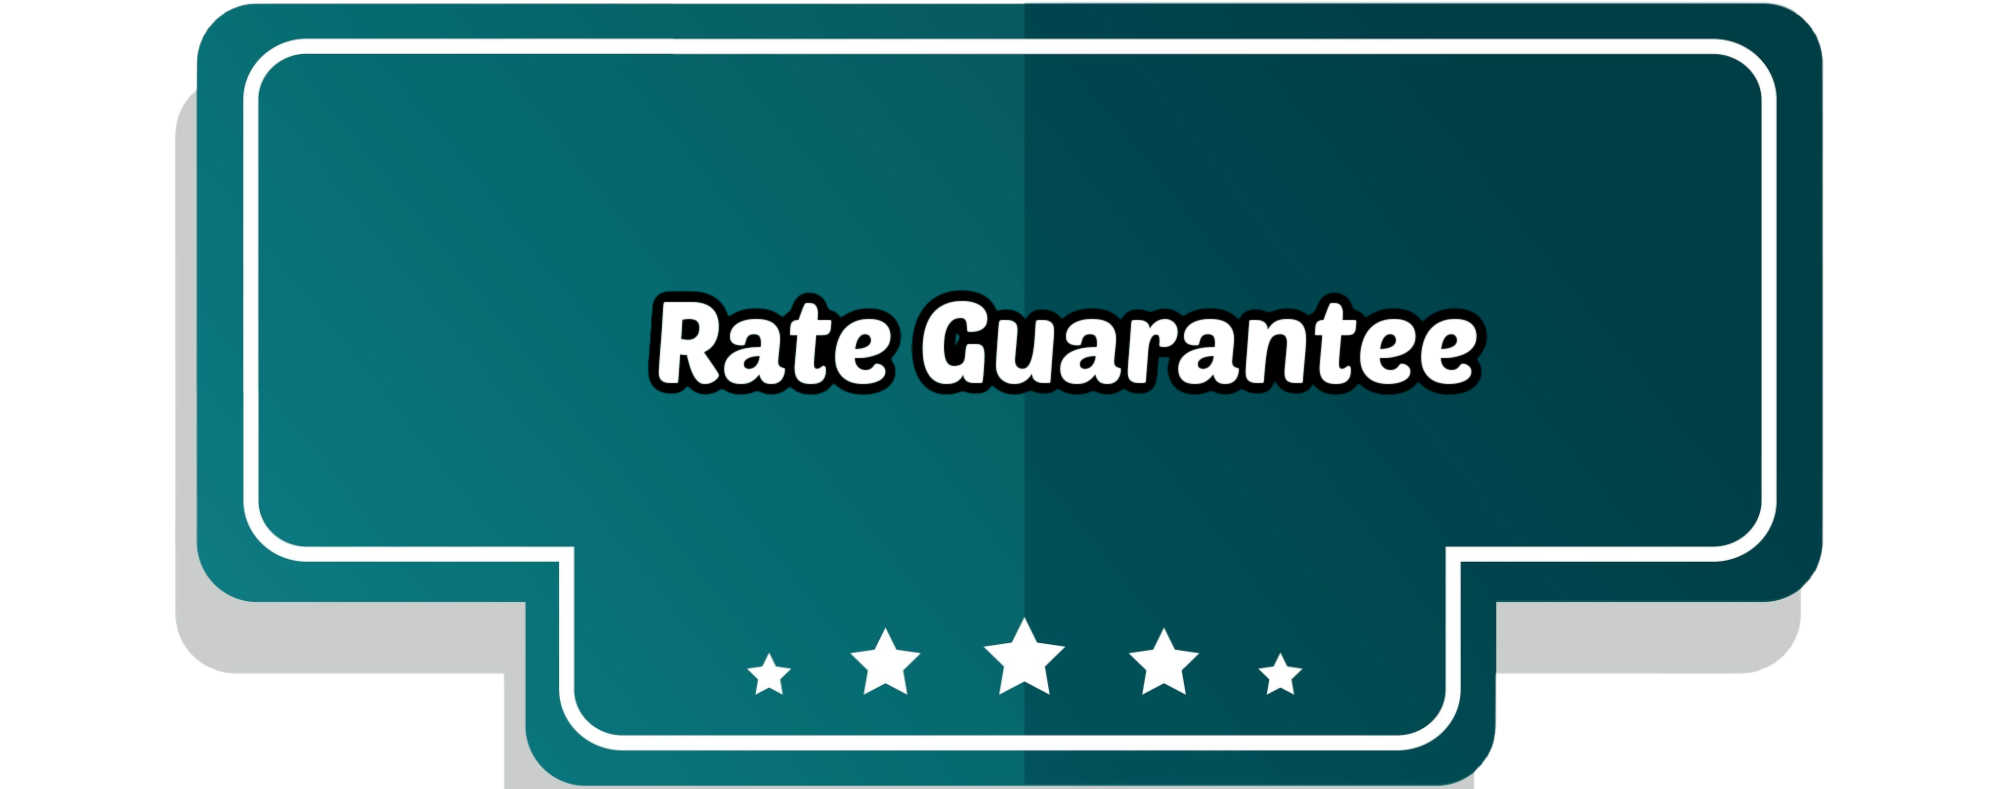 image of rate guarantee